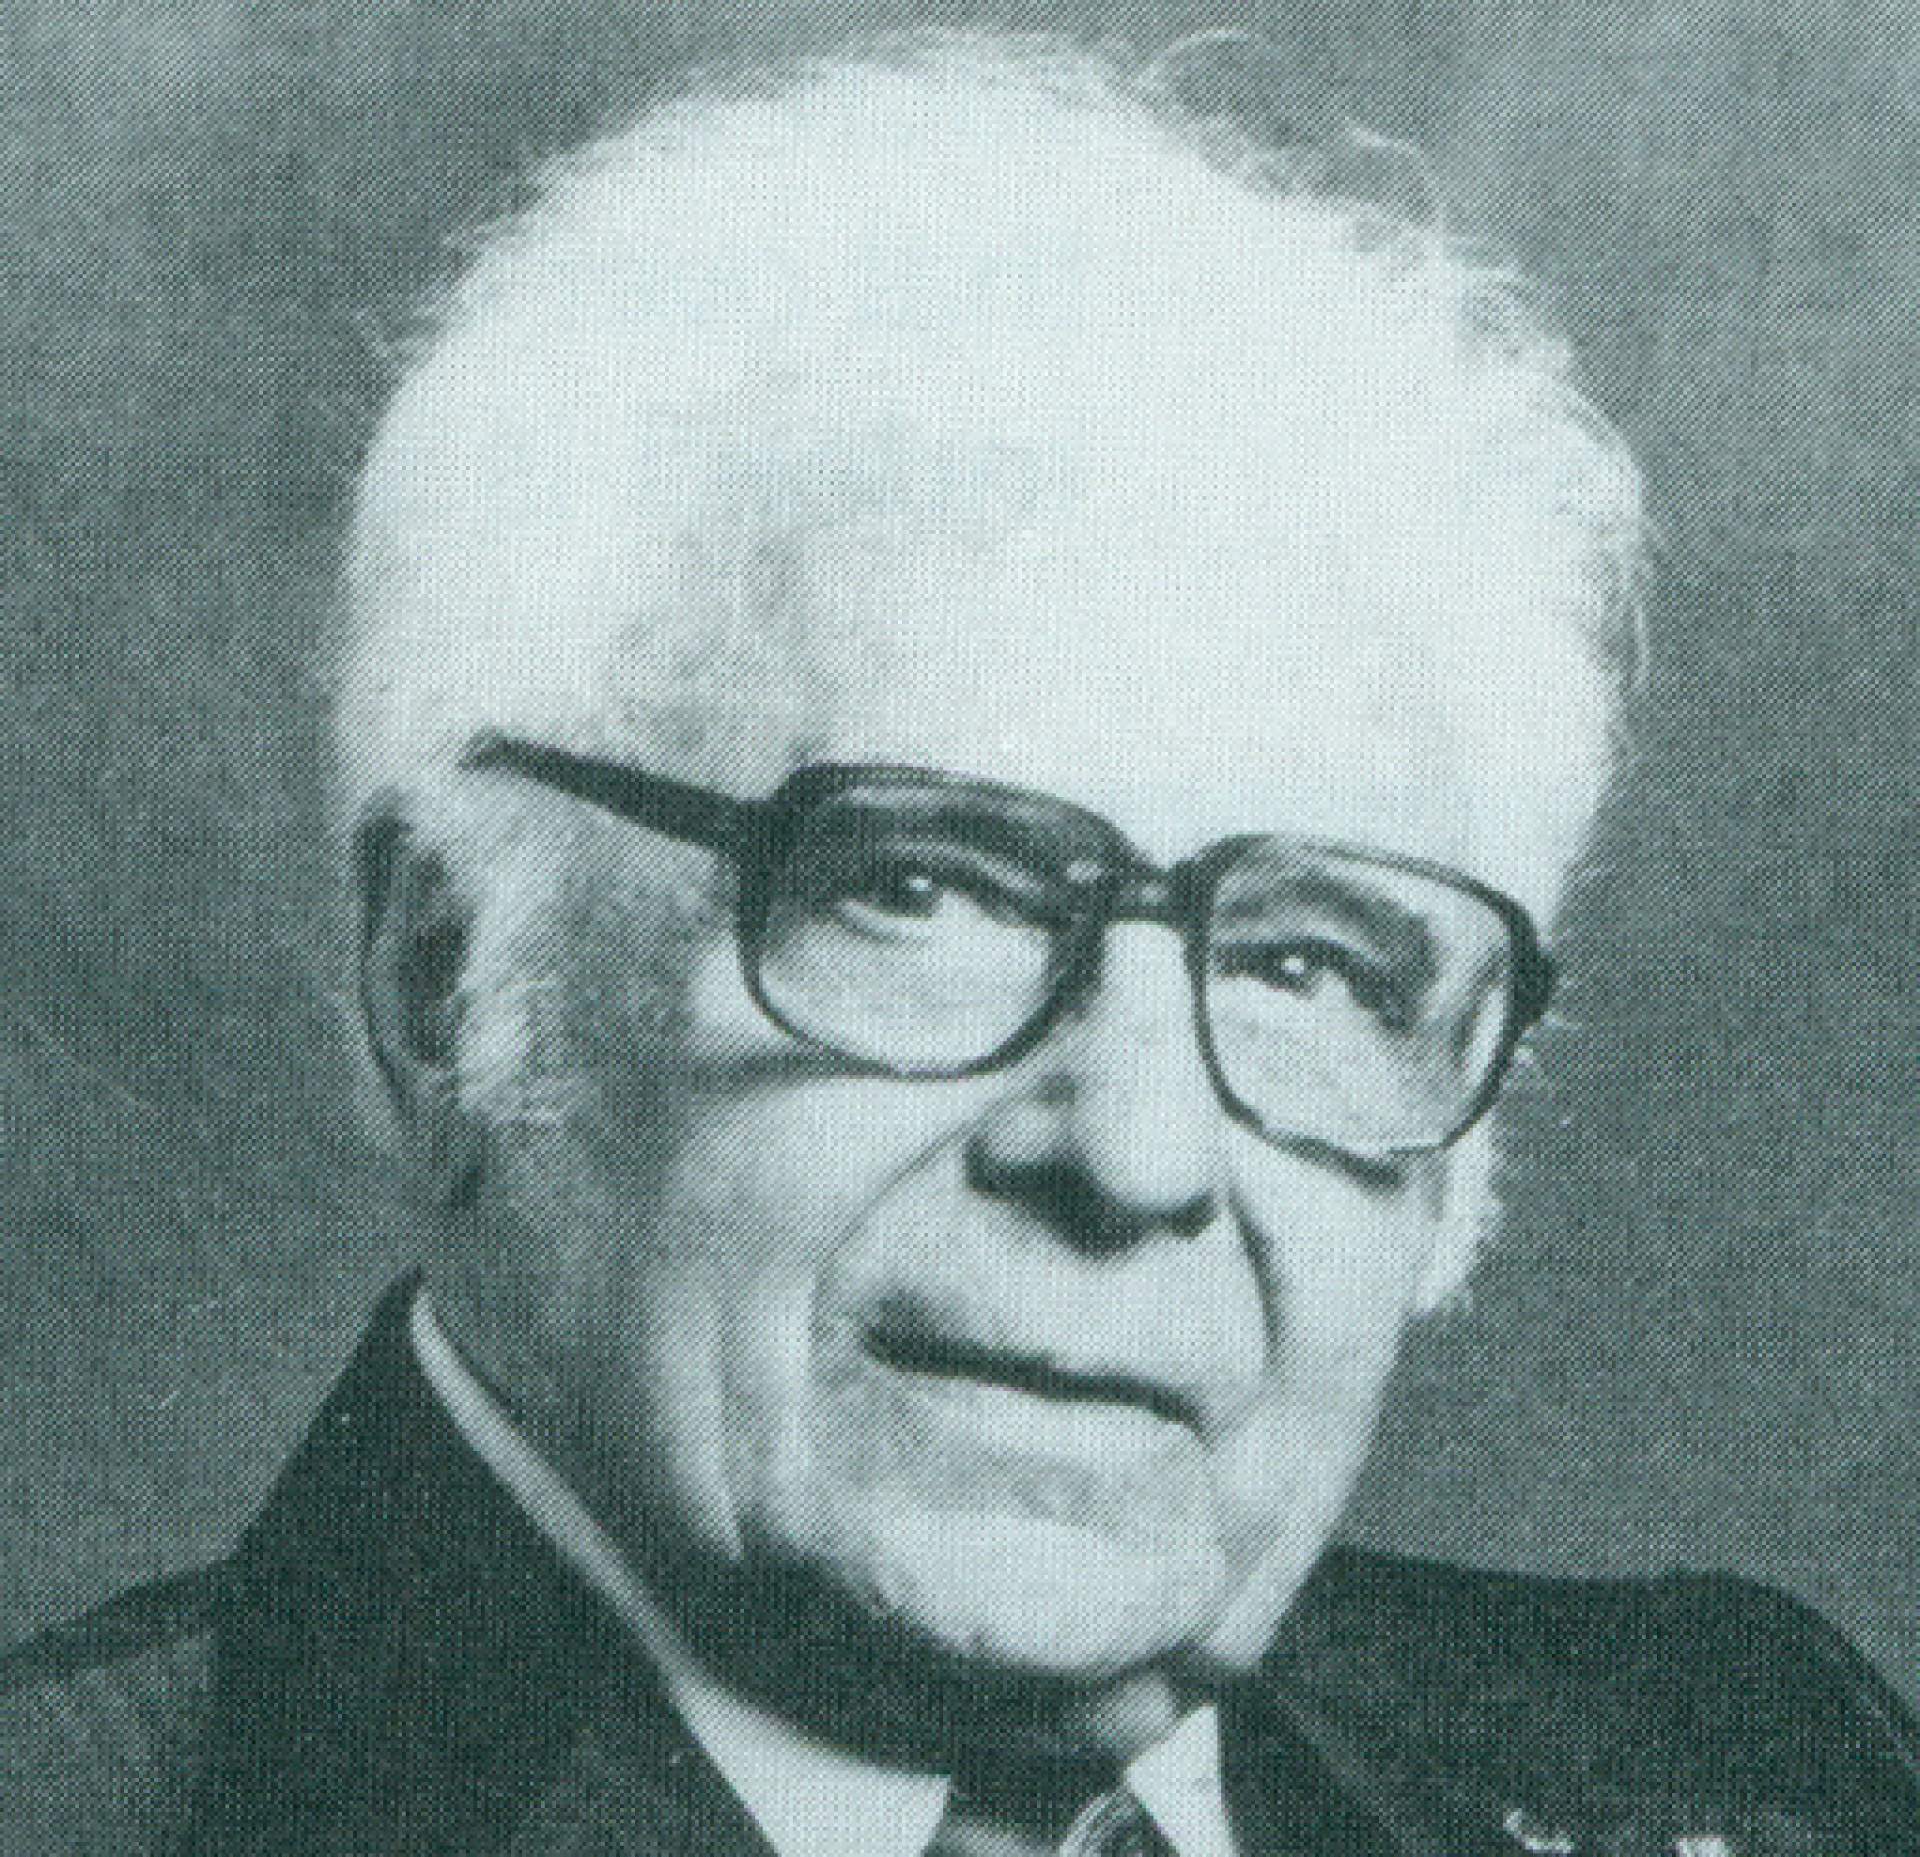 Carlo Nisita